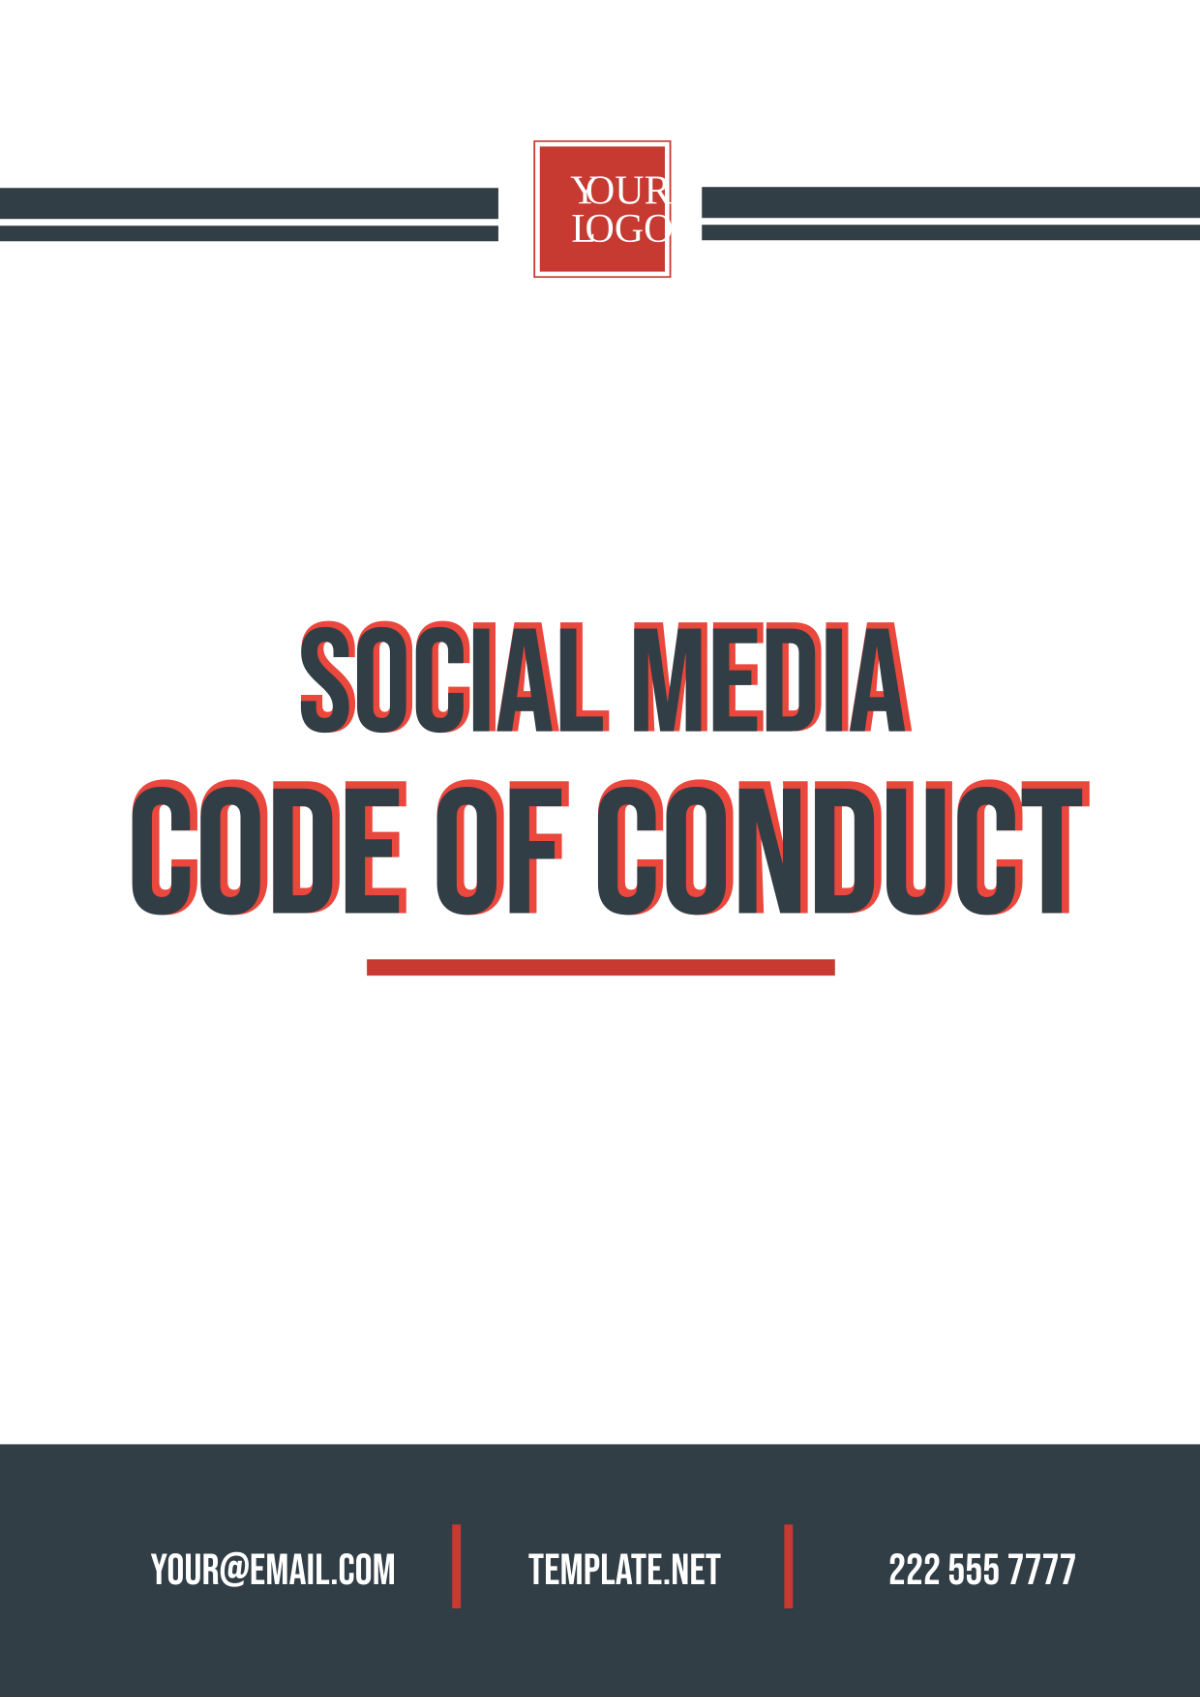 Social Media Code of Conduct Template